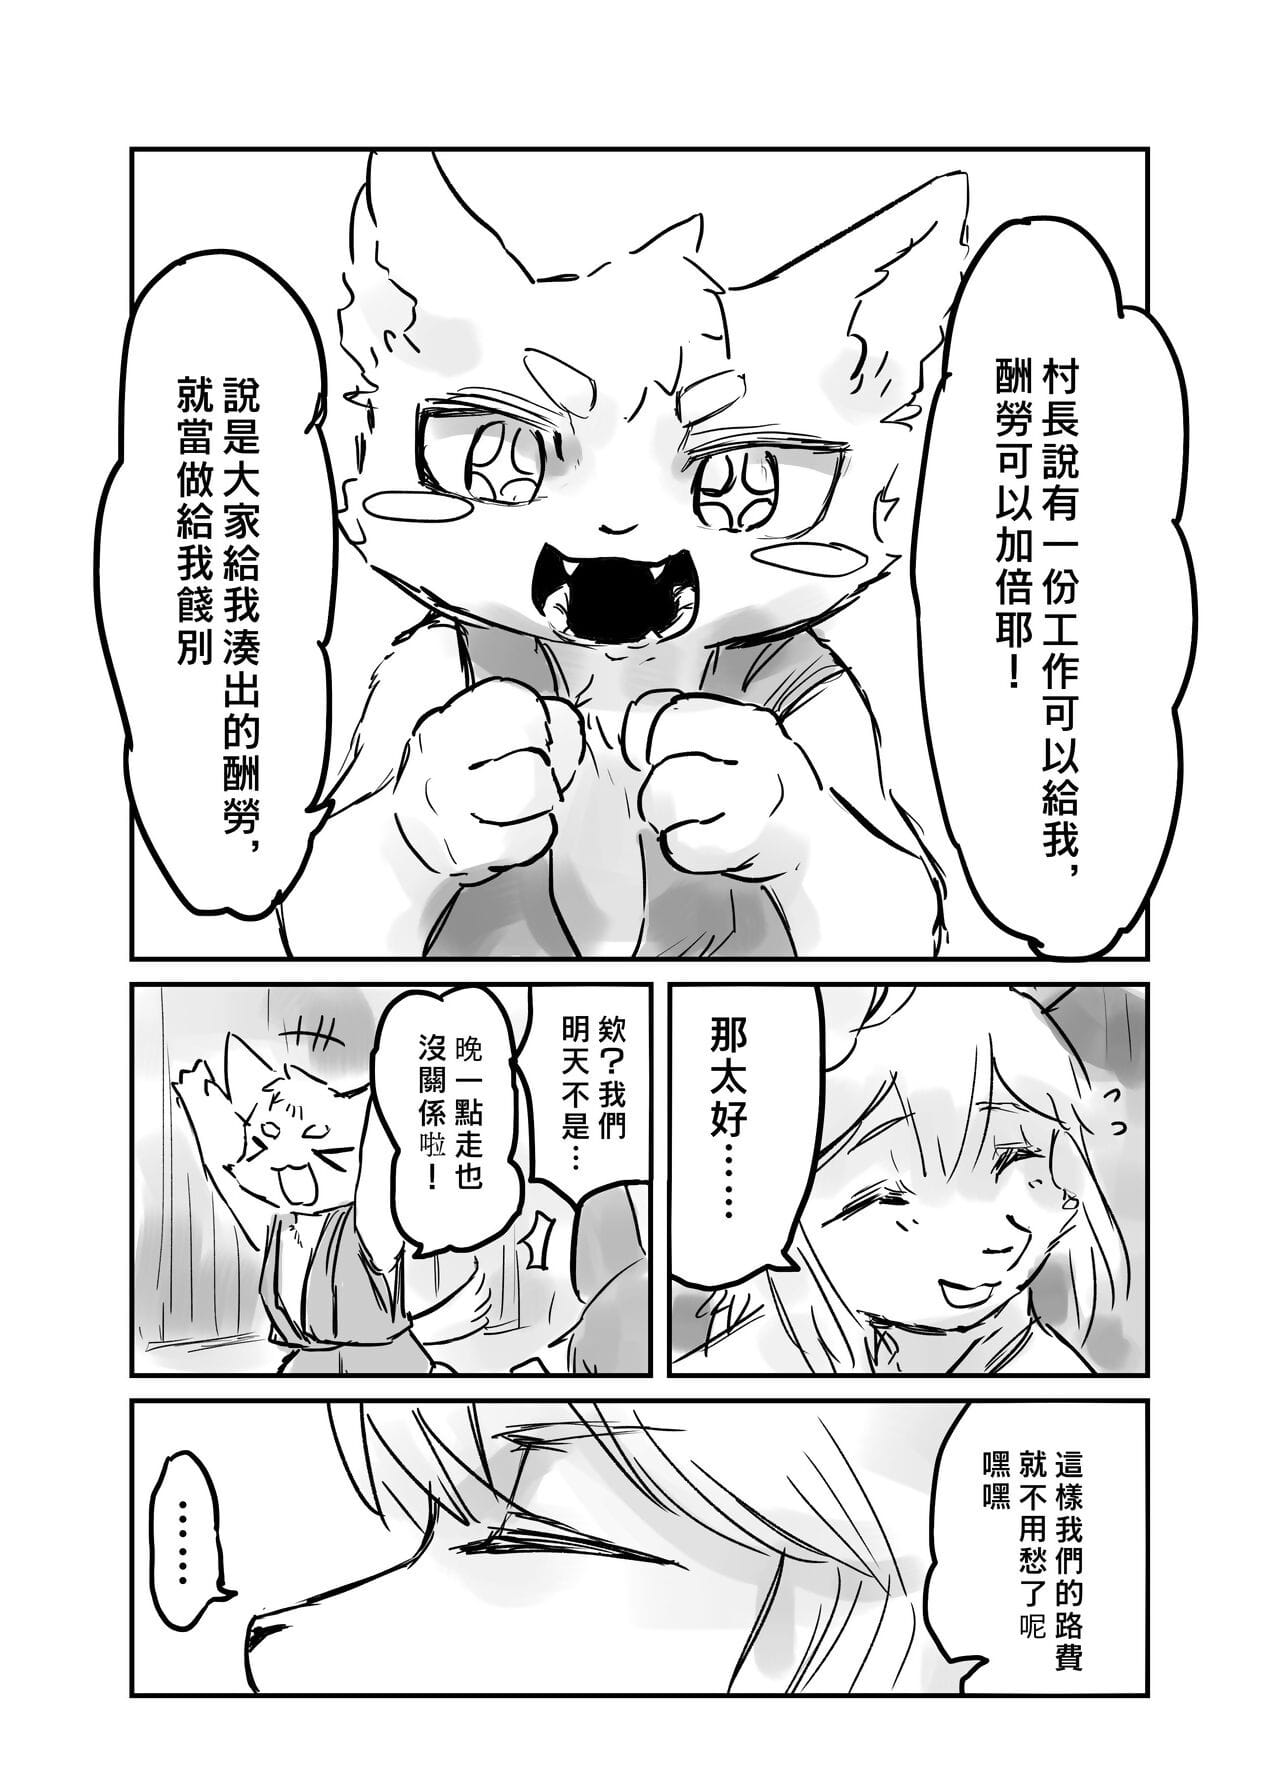 （the เยี่ยม 他乡之人 by：鬼流 ส่วนหนึ่ง 2 page 1